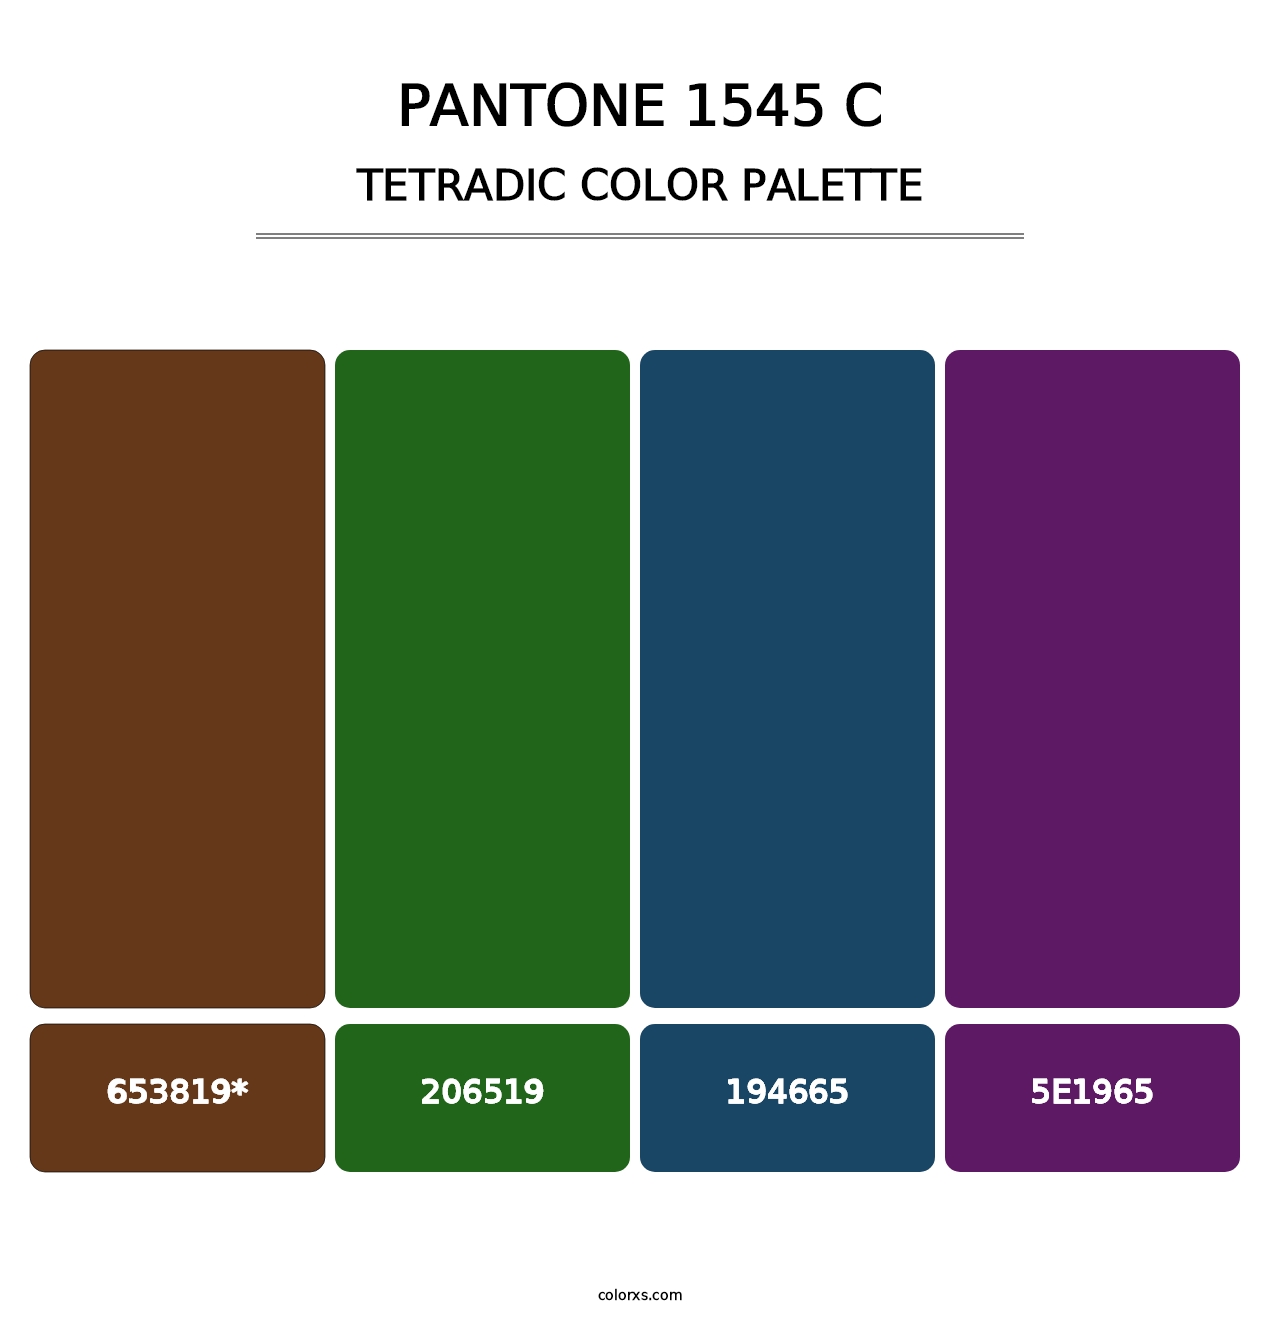 PANTONE 1545 C - Tetradic Color Palette